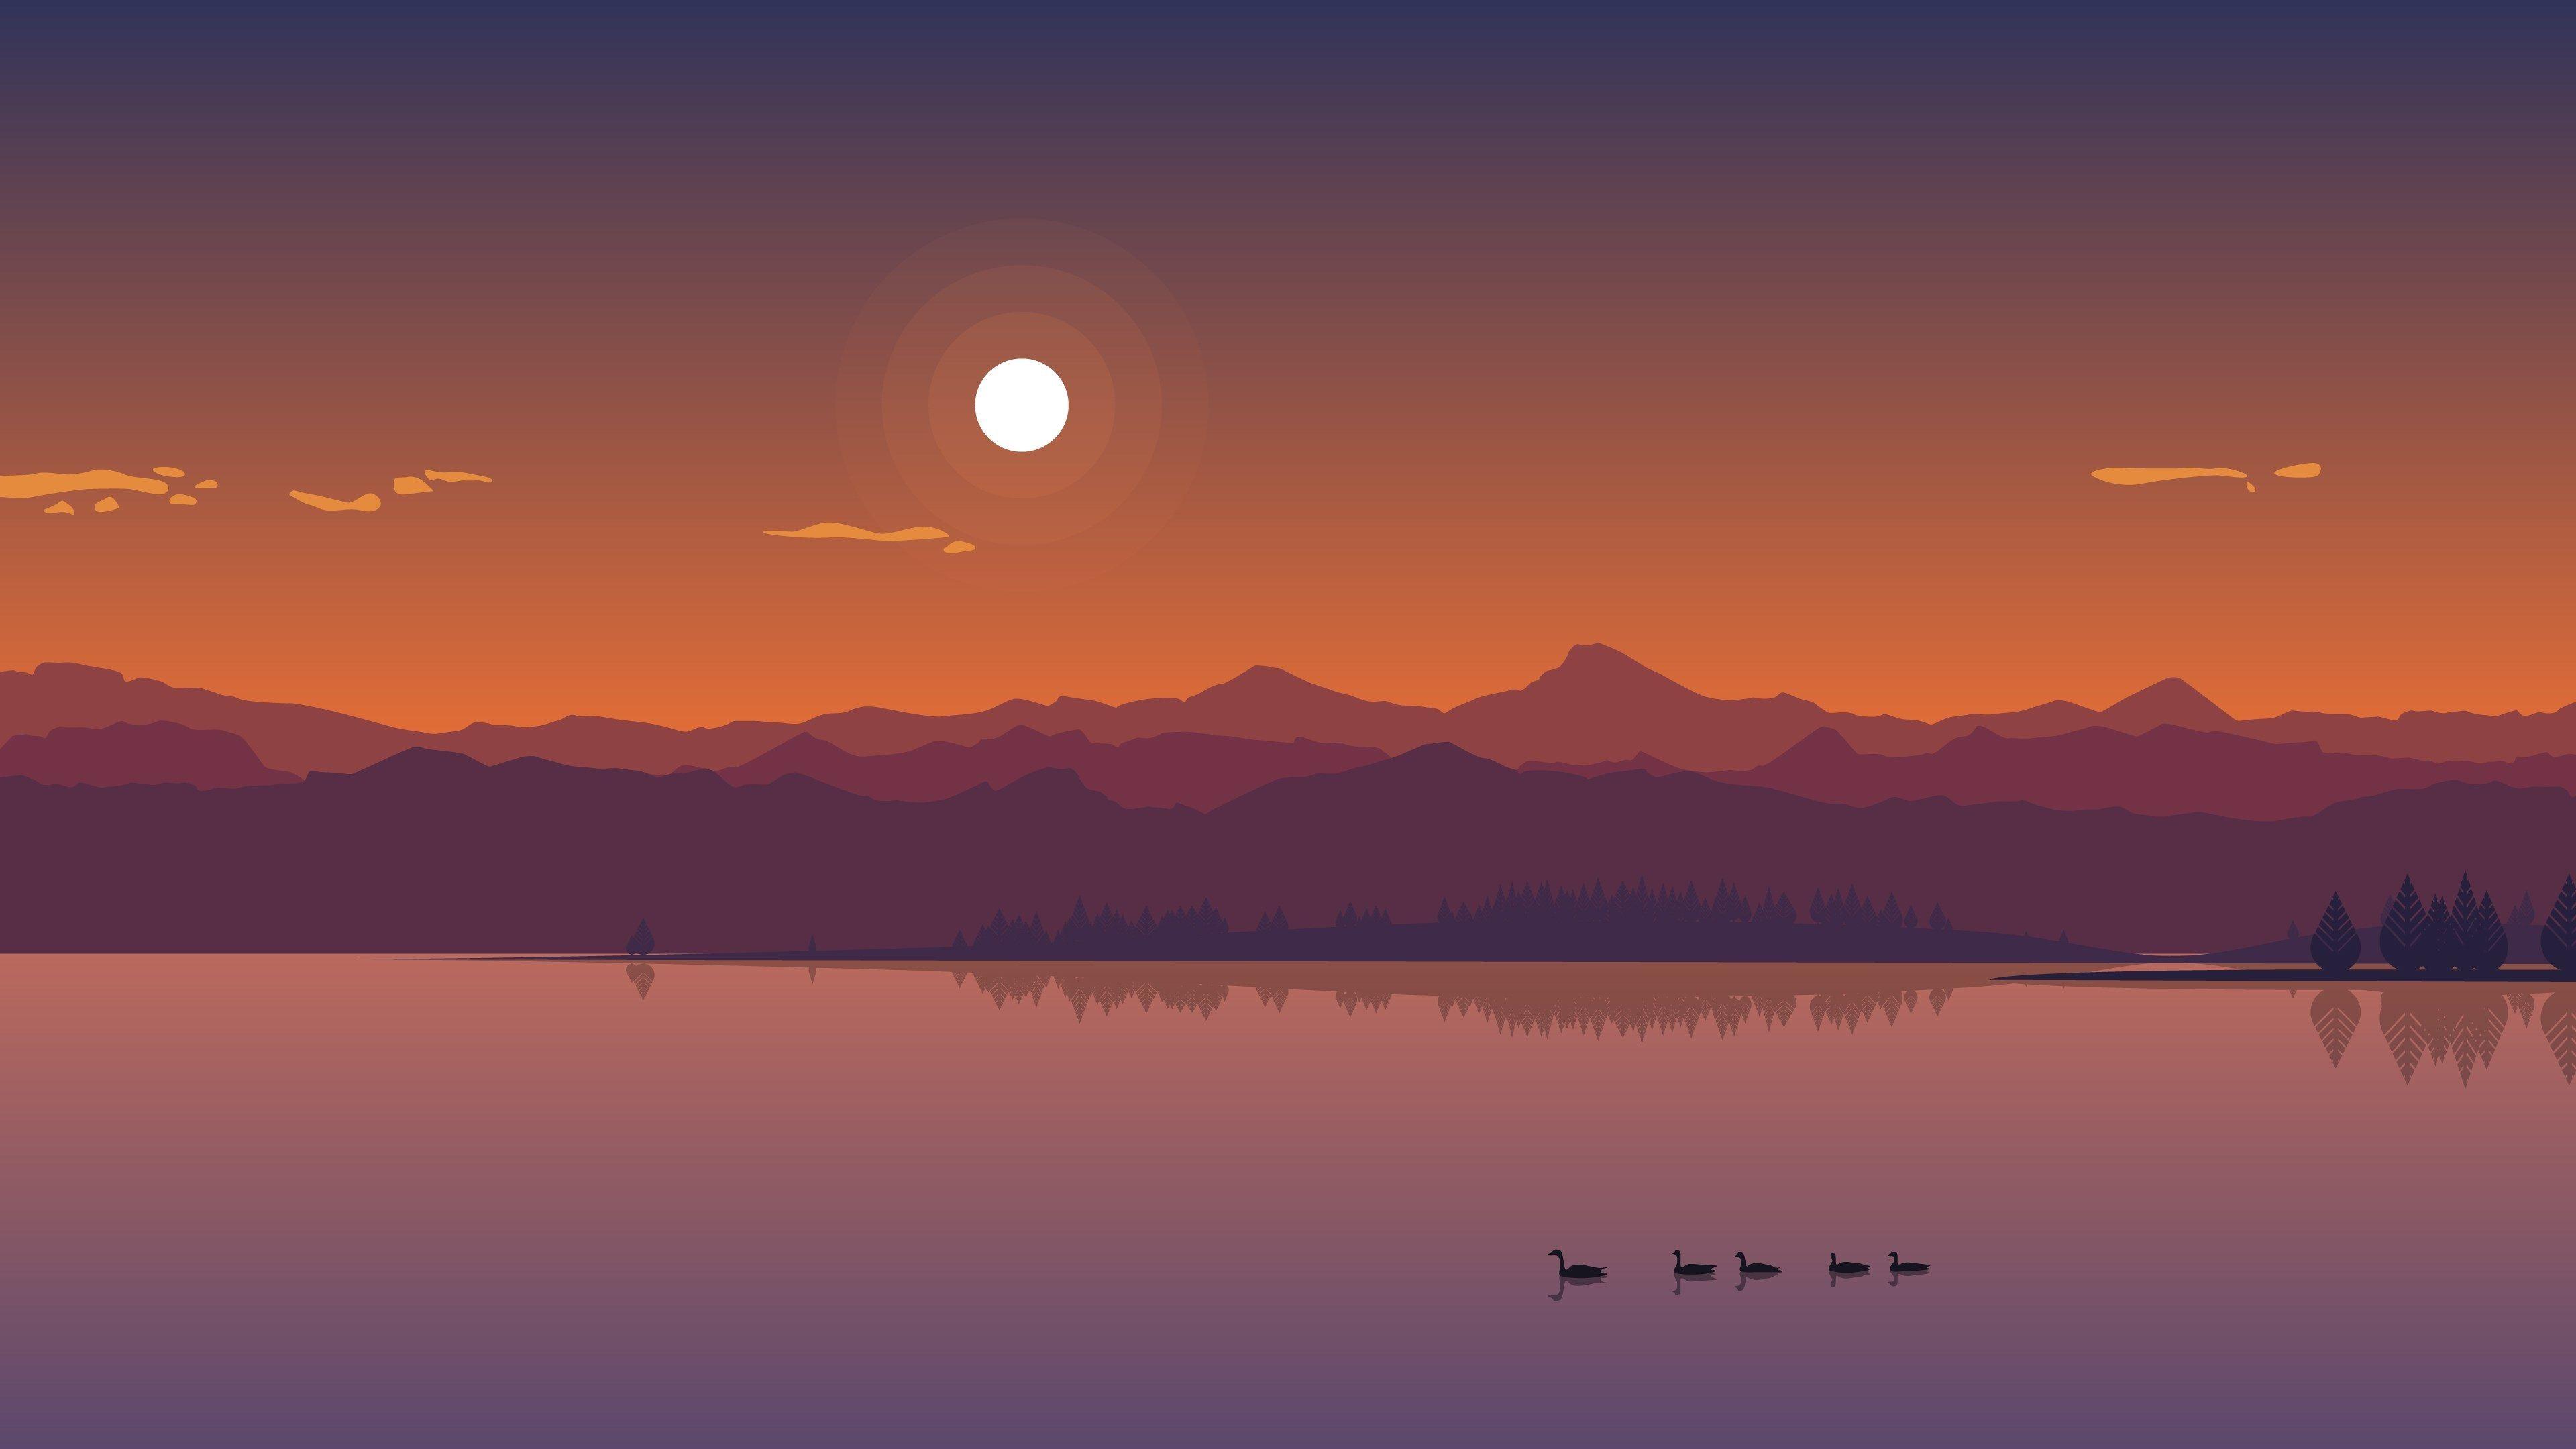 minimalism 4k theme background image. Desktop